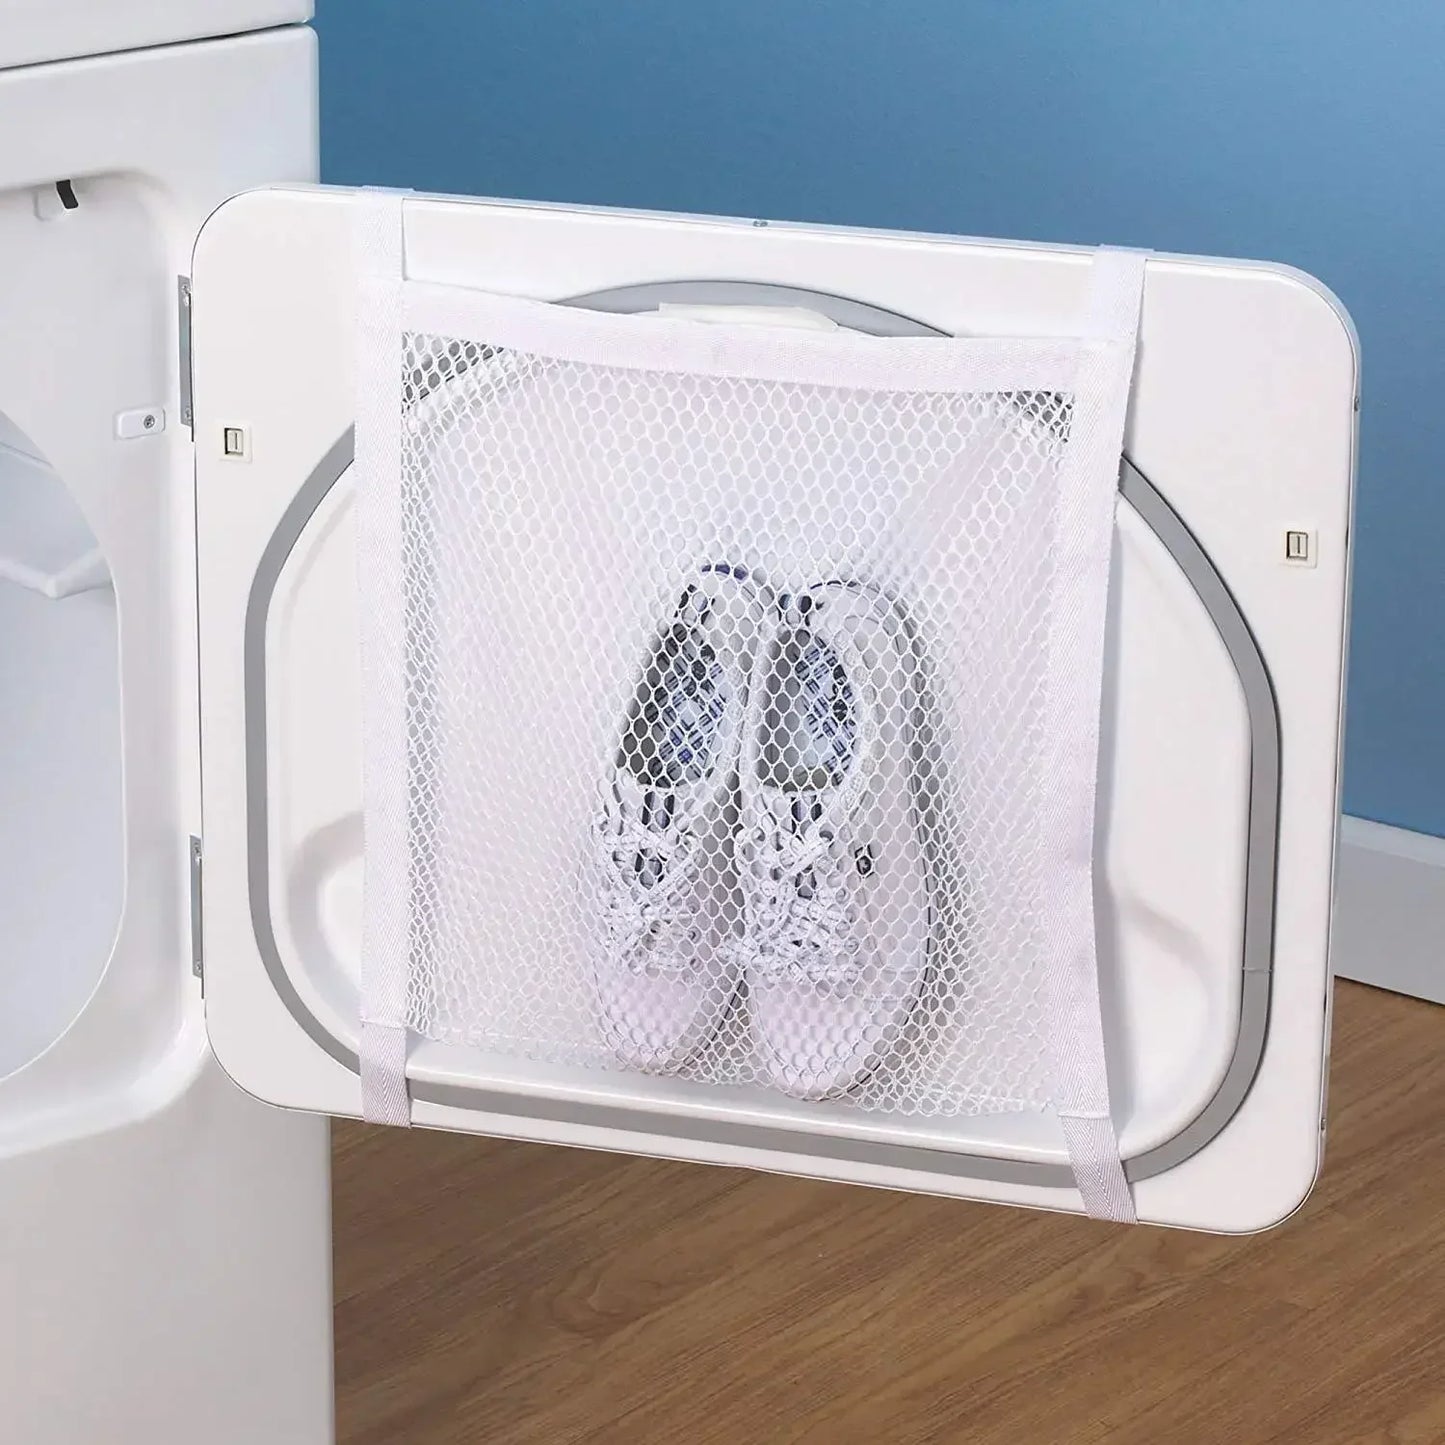 Laundry Elastic Organizer
Dryer Door Shoe Net Straps
Bag Shoes Sneaker
Home Clothes Organization Storage 
Women Modern Luxury